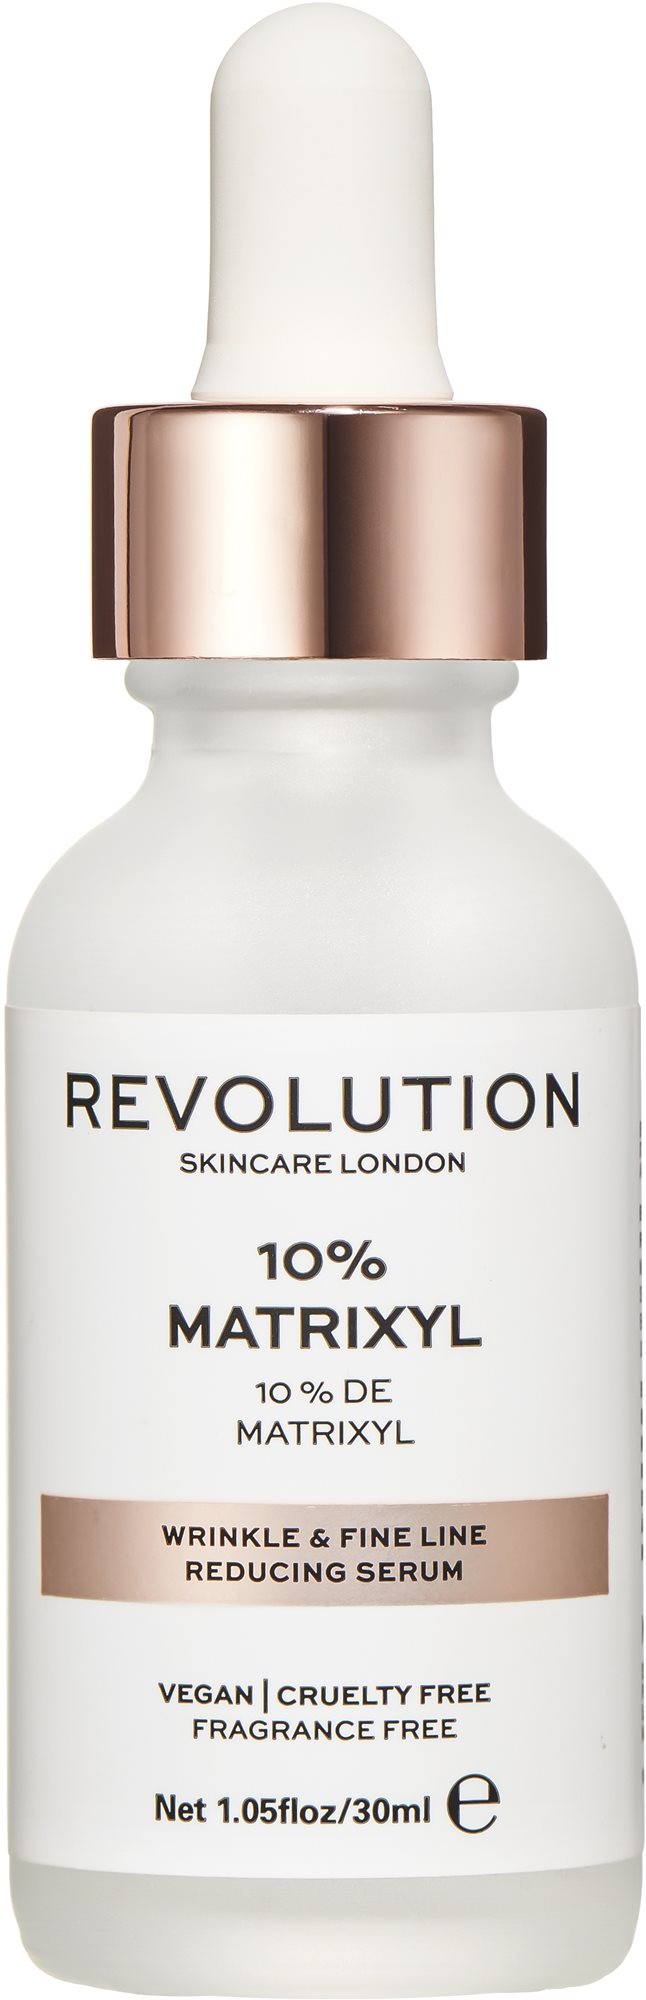 REVOLUTION SKINCARE Wrinkle & Fine Line Reducing Serum - 10% Matrixyl 30 ml